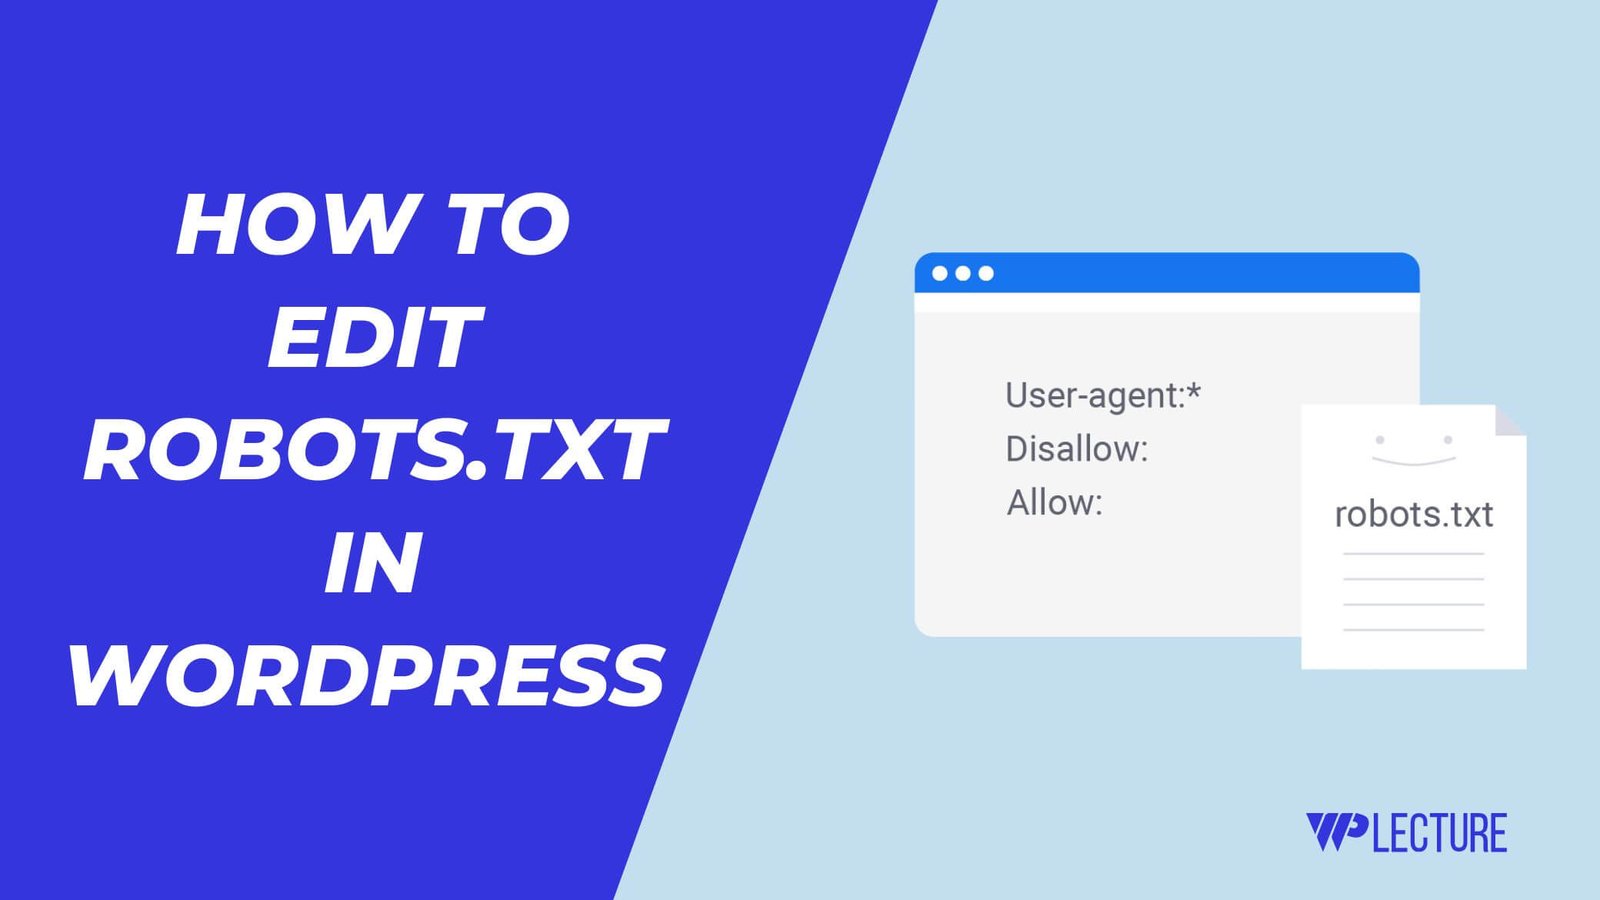 How To Edit Robots.txt in WordPress